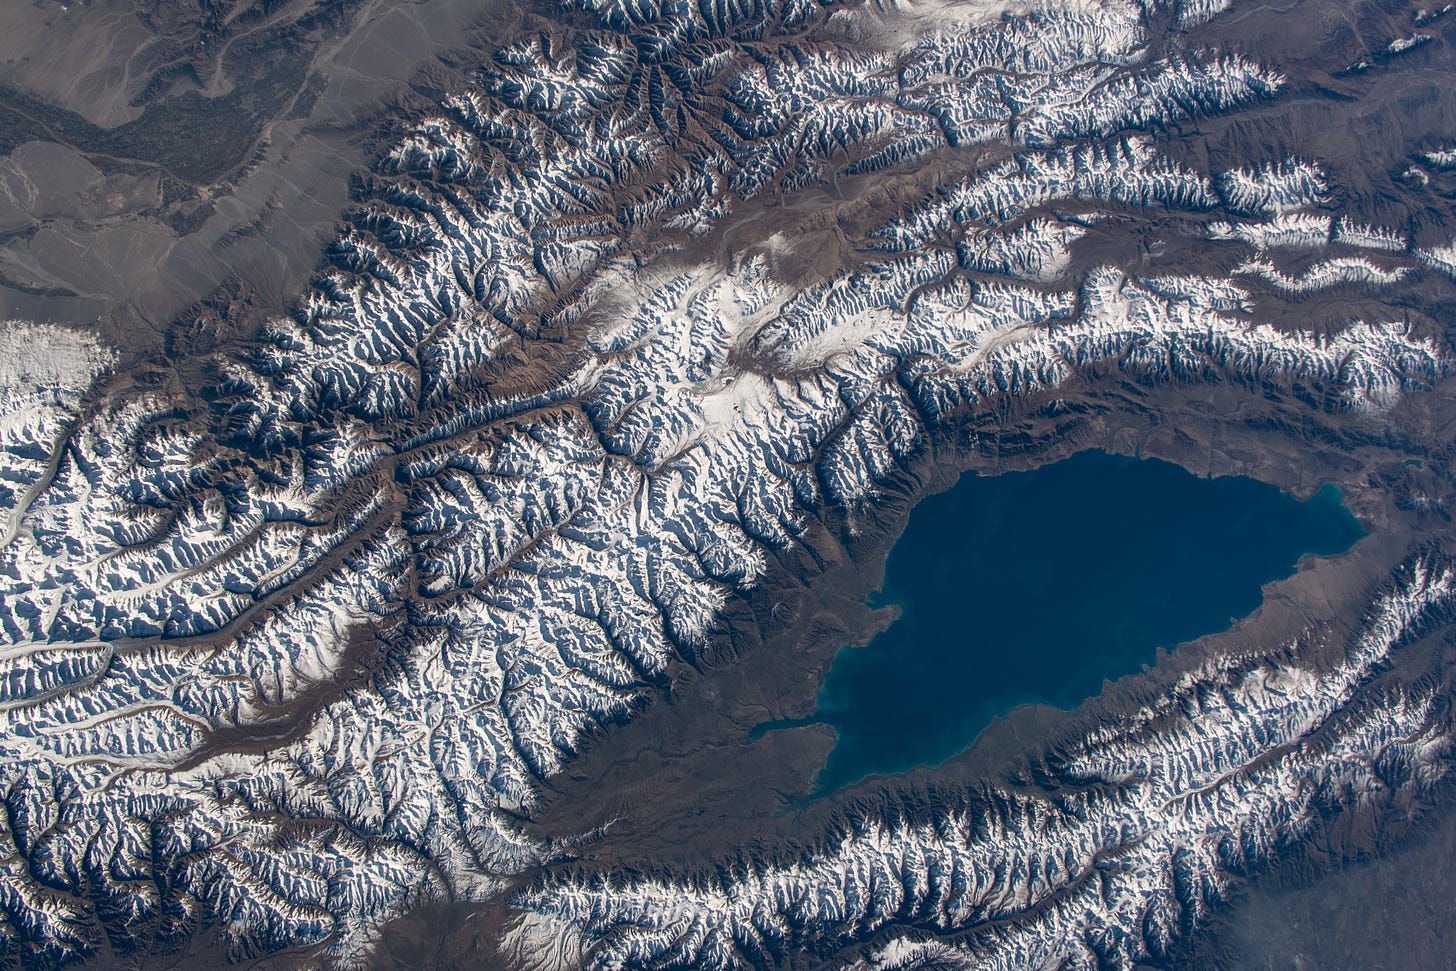 The mountain lake of Issyk-Kul in Kyrgyzstan | NASA